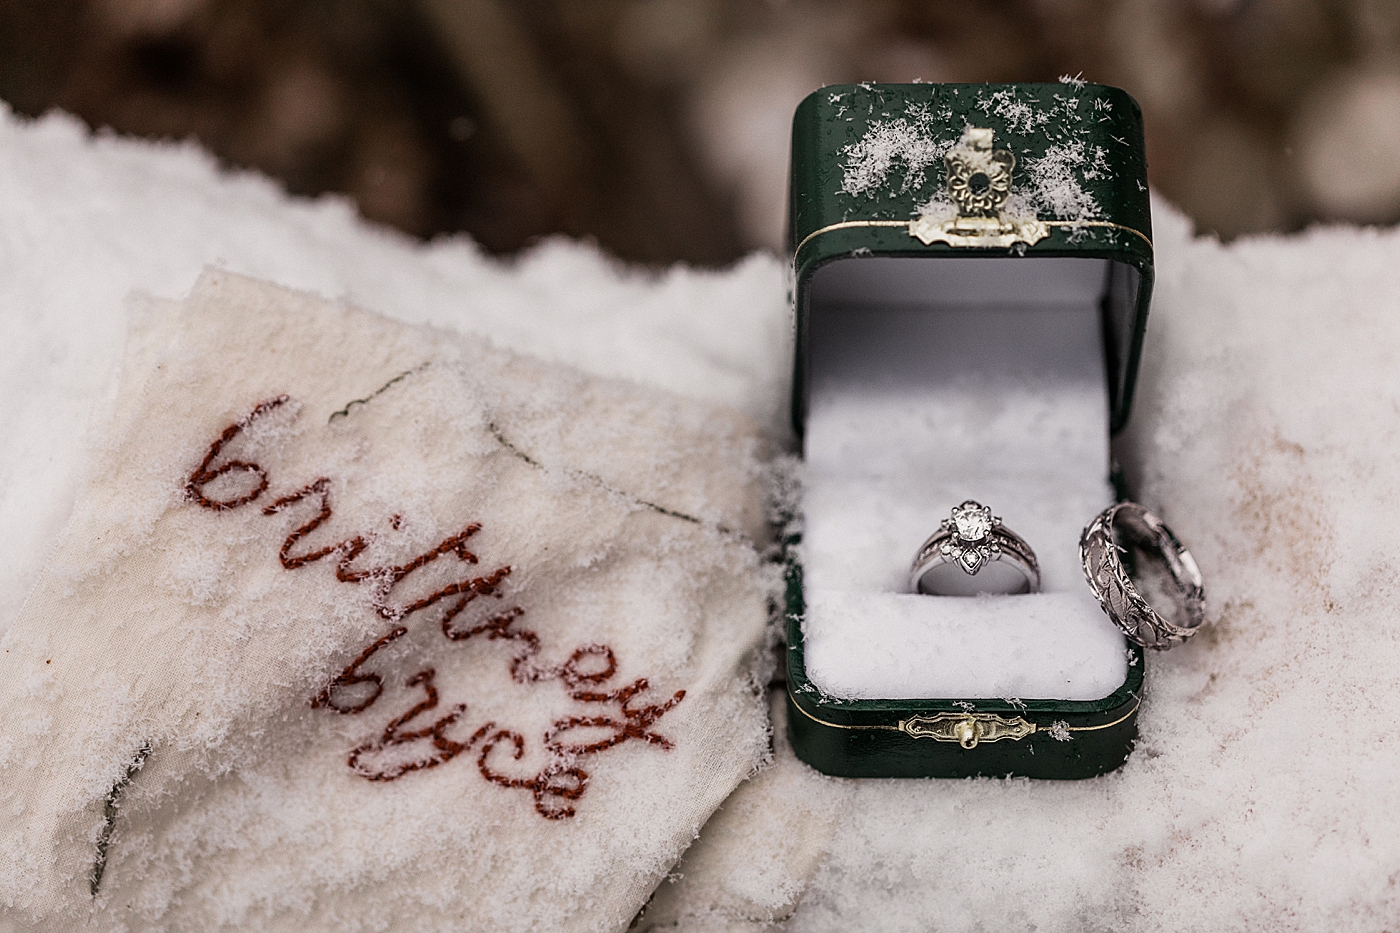 Styled winter elopement inspiration. Photos by PNW Elopement Photographer, Megan Montalvo Photography.